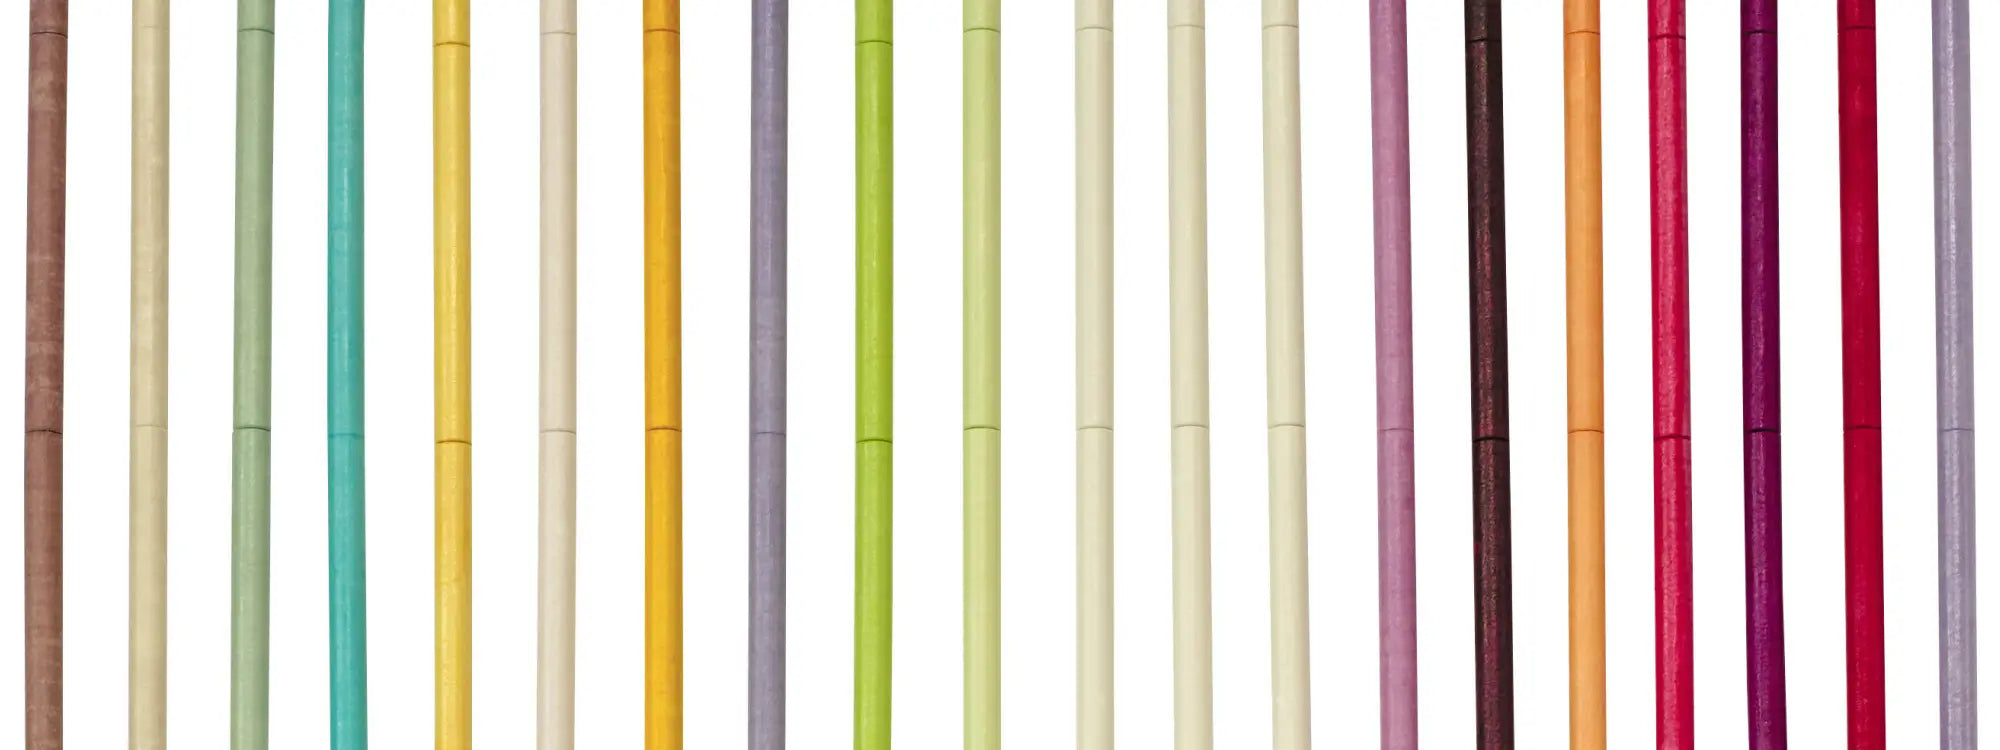 SmartScent Stick Holders